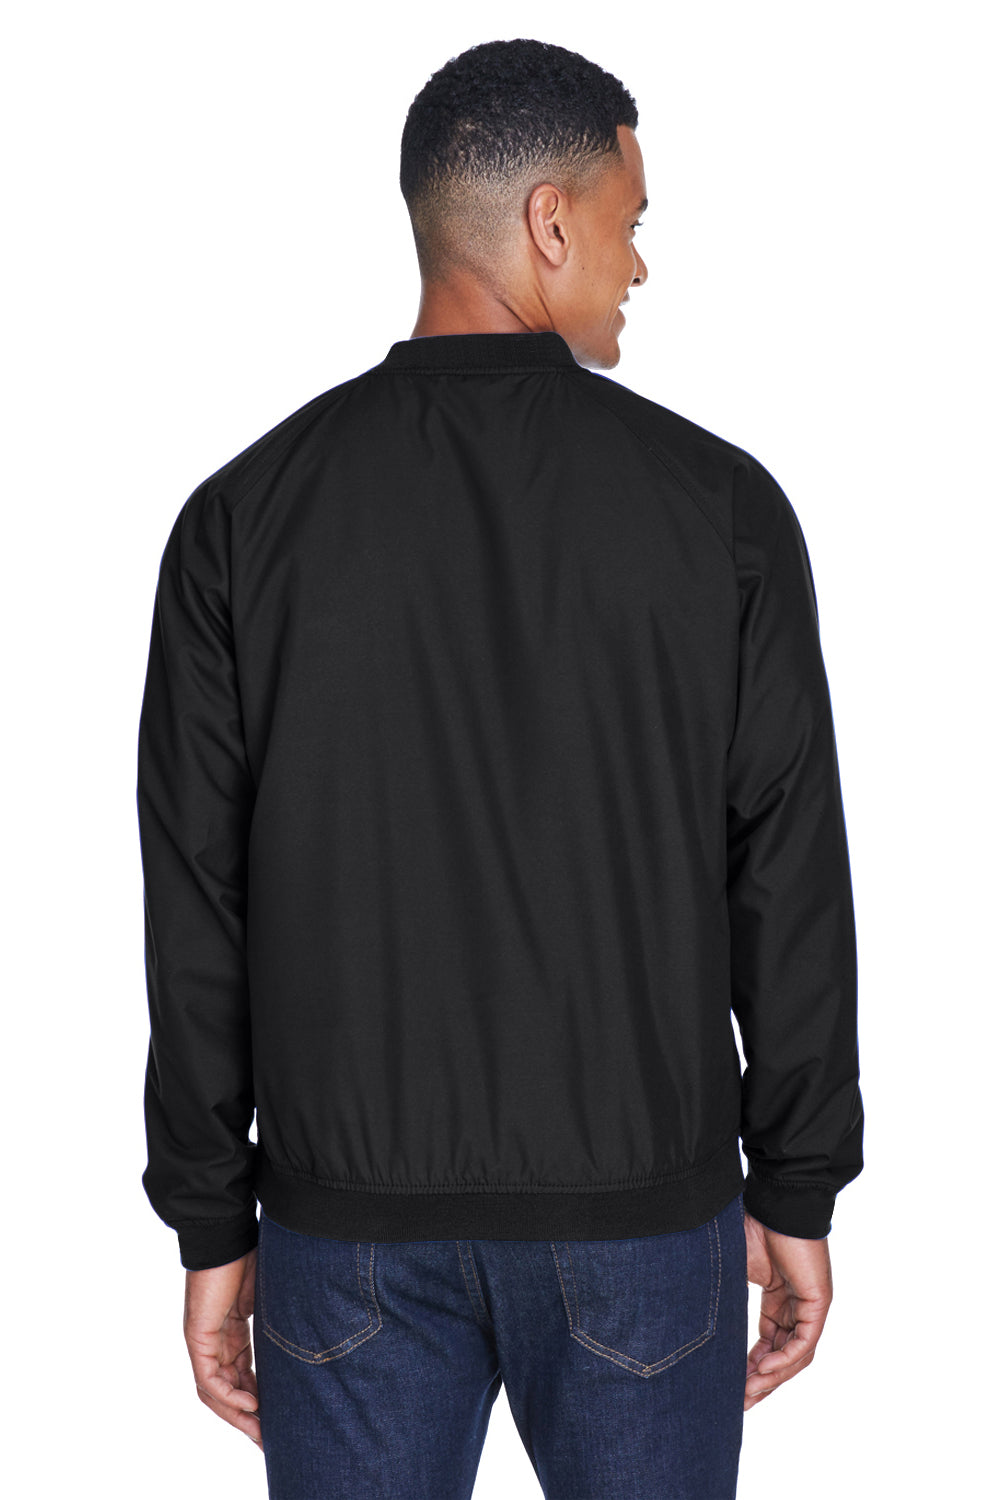 UltraClub 8926 Mens Crossover Microfiber Wind & Water Resistant V-Neck Jacket Black Back